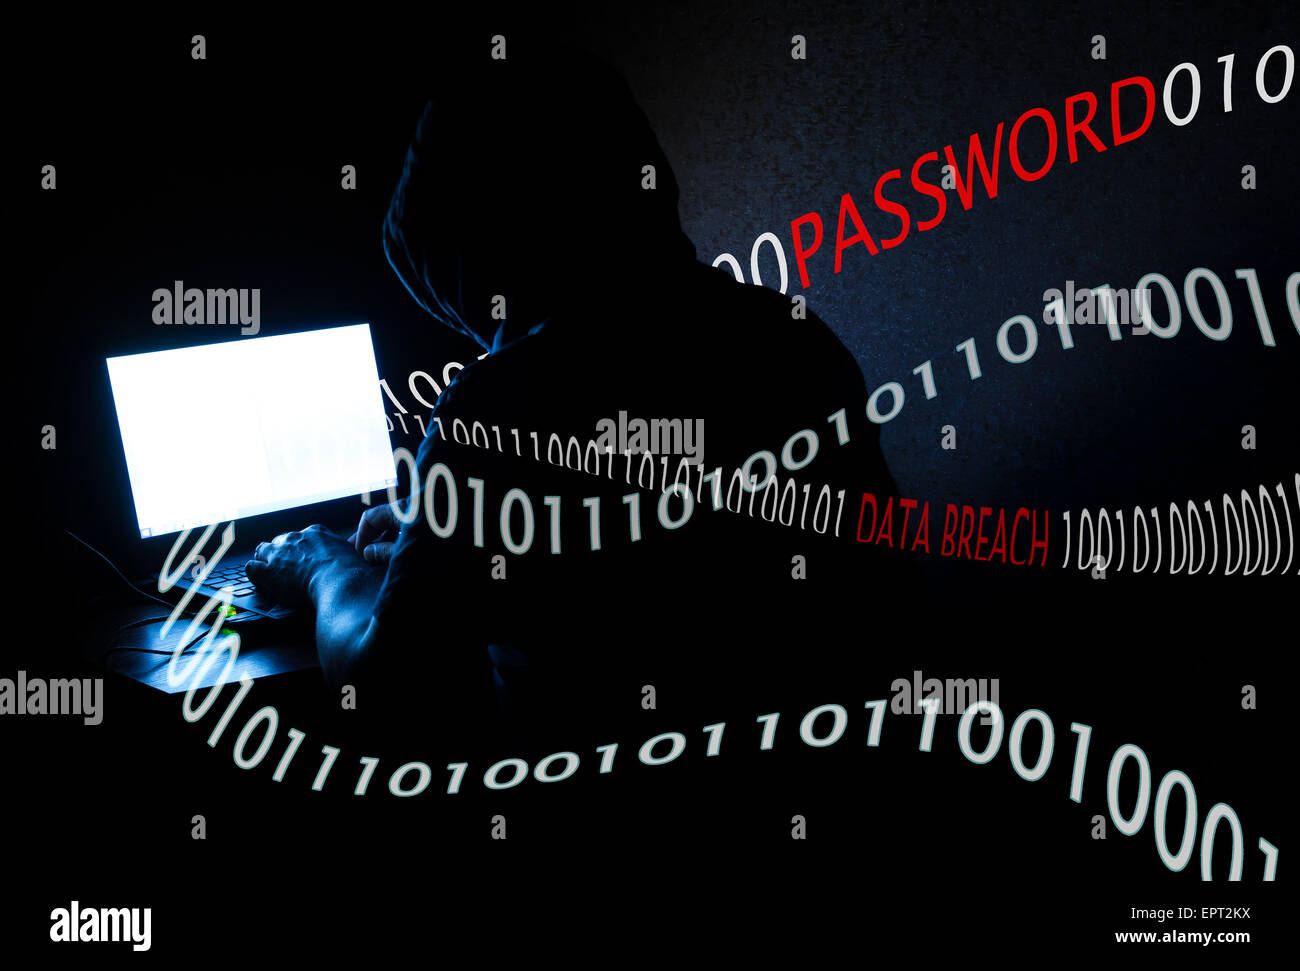 Capucha negra hacker robar datos personales Foto de stock